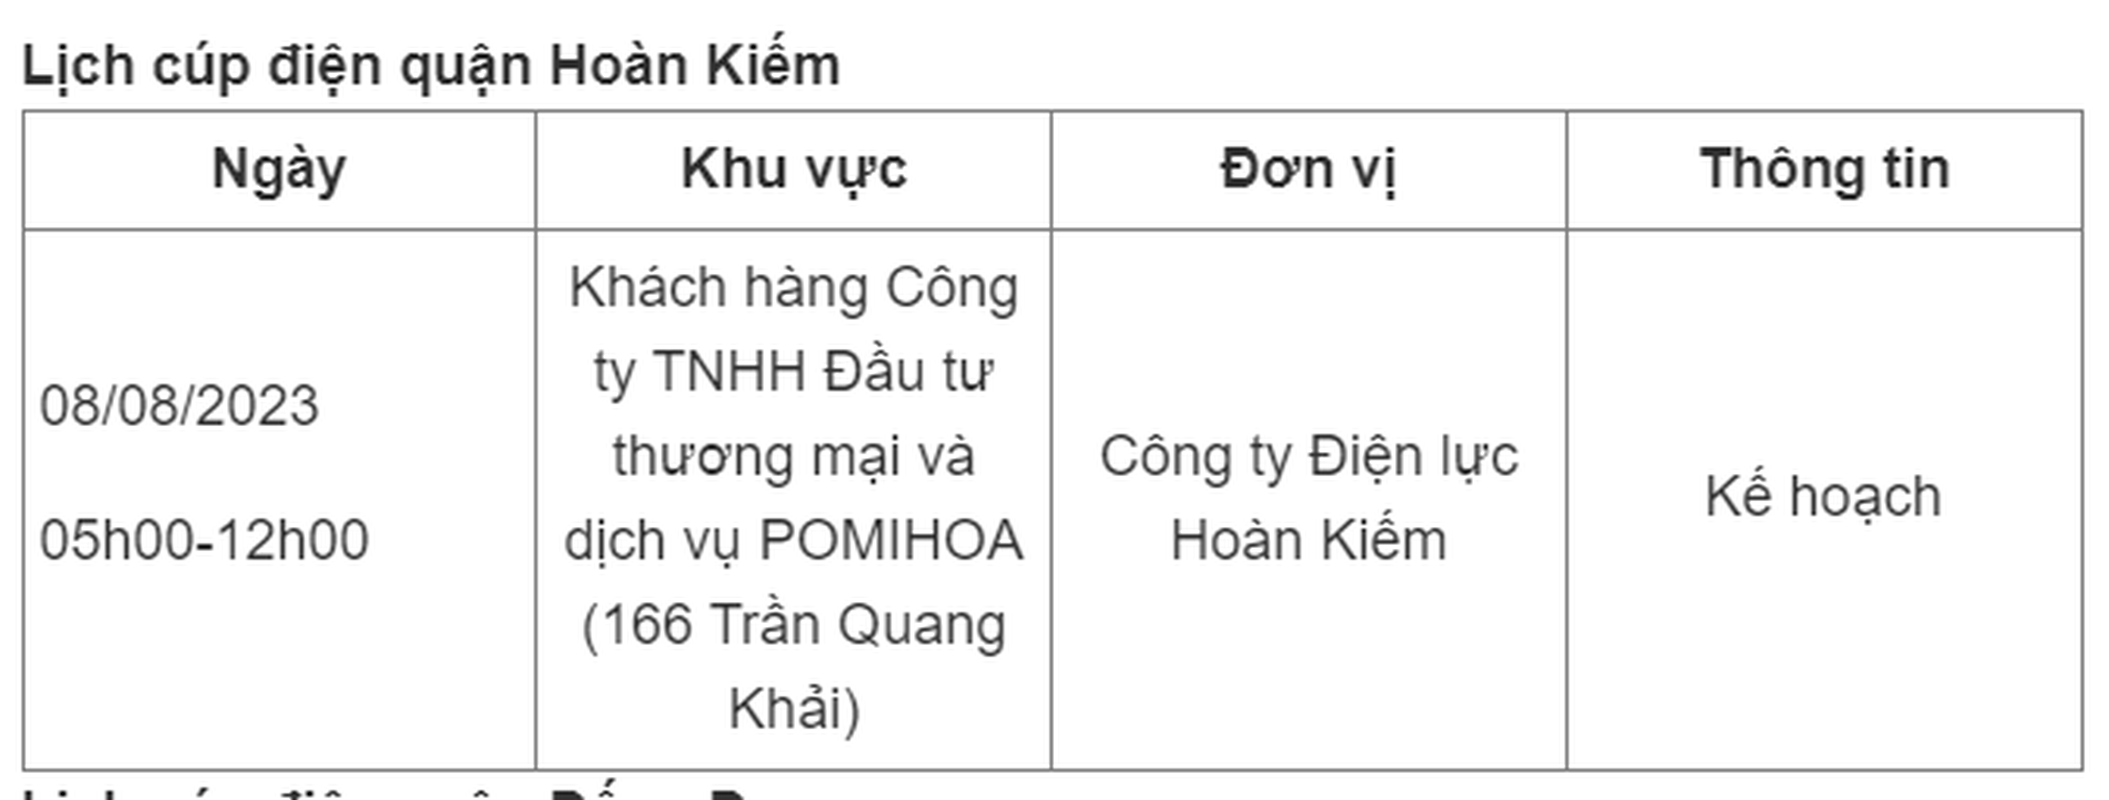 Lich cup dien Ha Noi ngay 8/8: Co noi bi cup tu 5h sang-Hinh-2